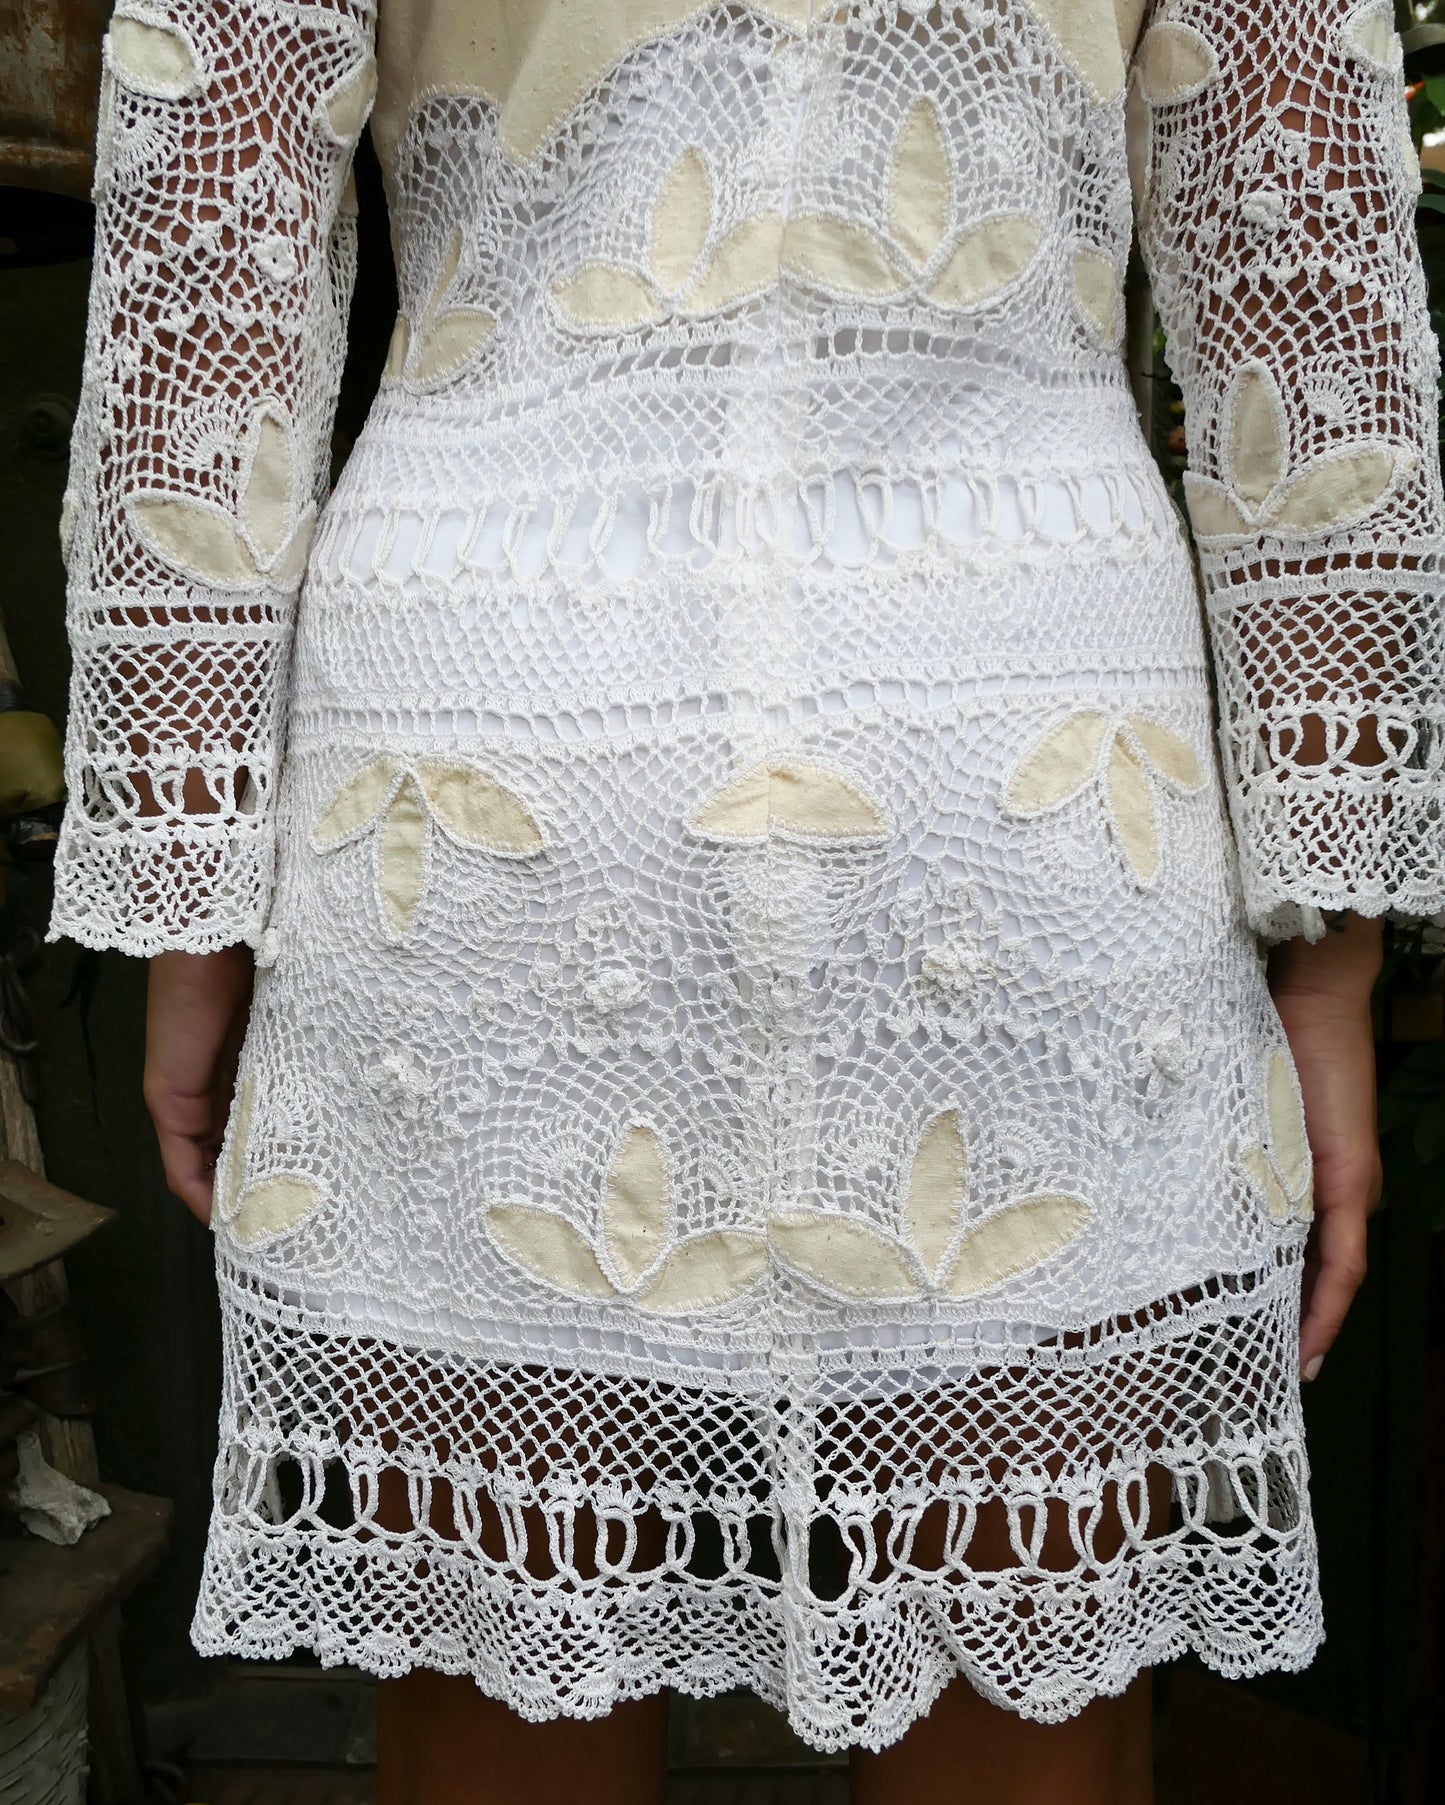 Closeup of bottom crochet hem of dress in the back. 